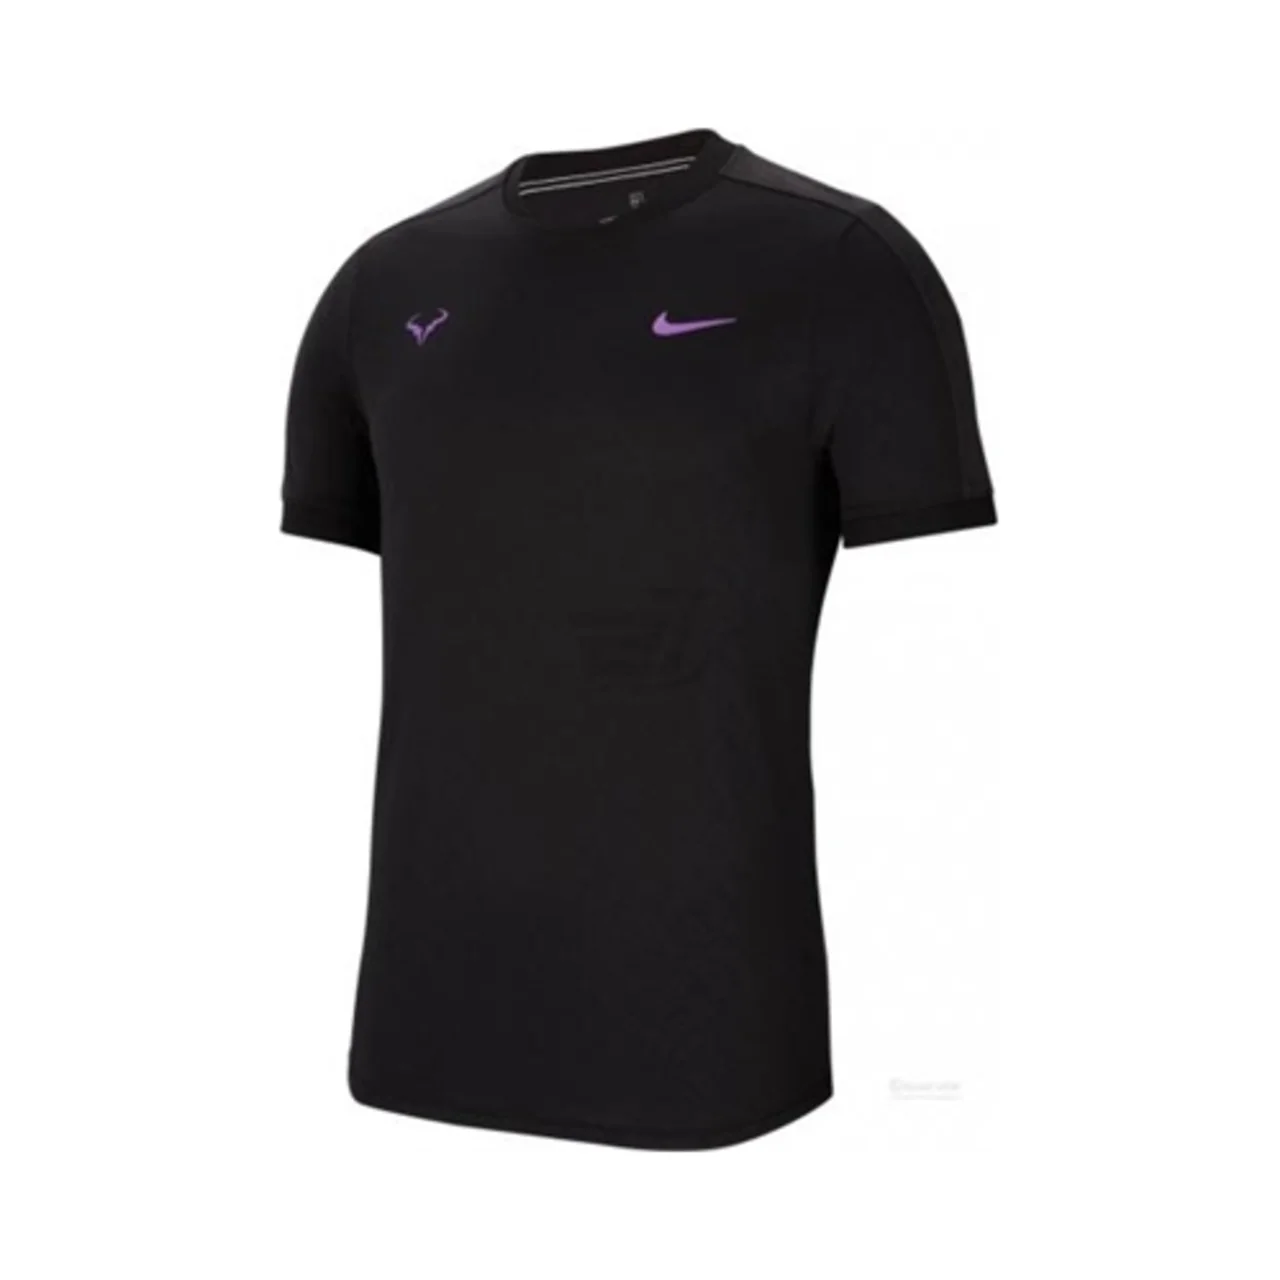 Nike Aero React Rafael Nadal Tee Black/Bright Violet